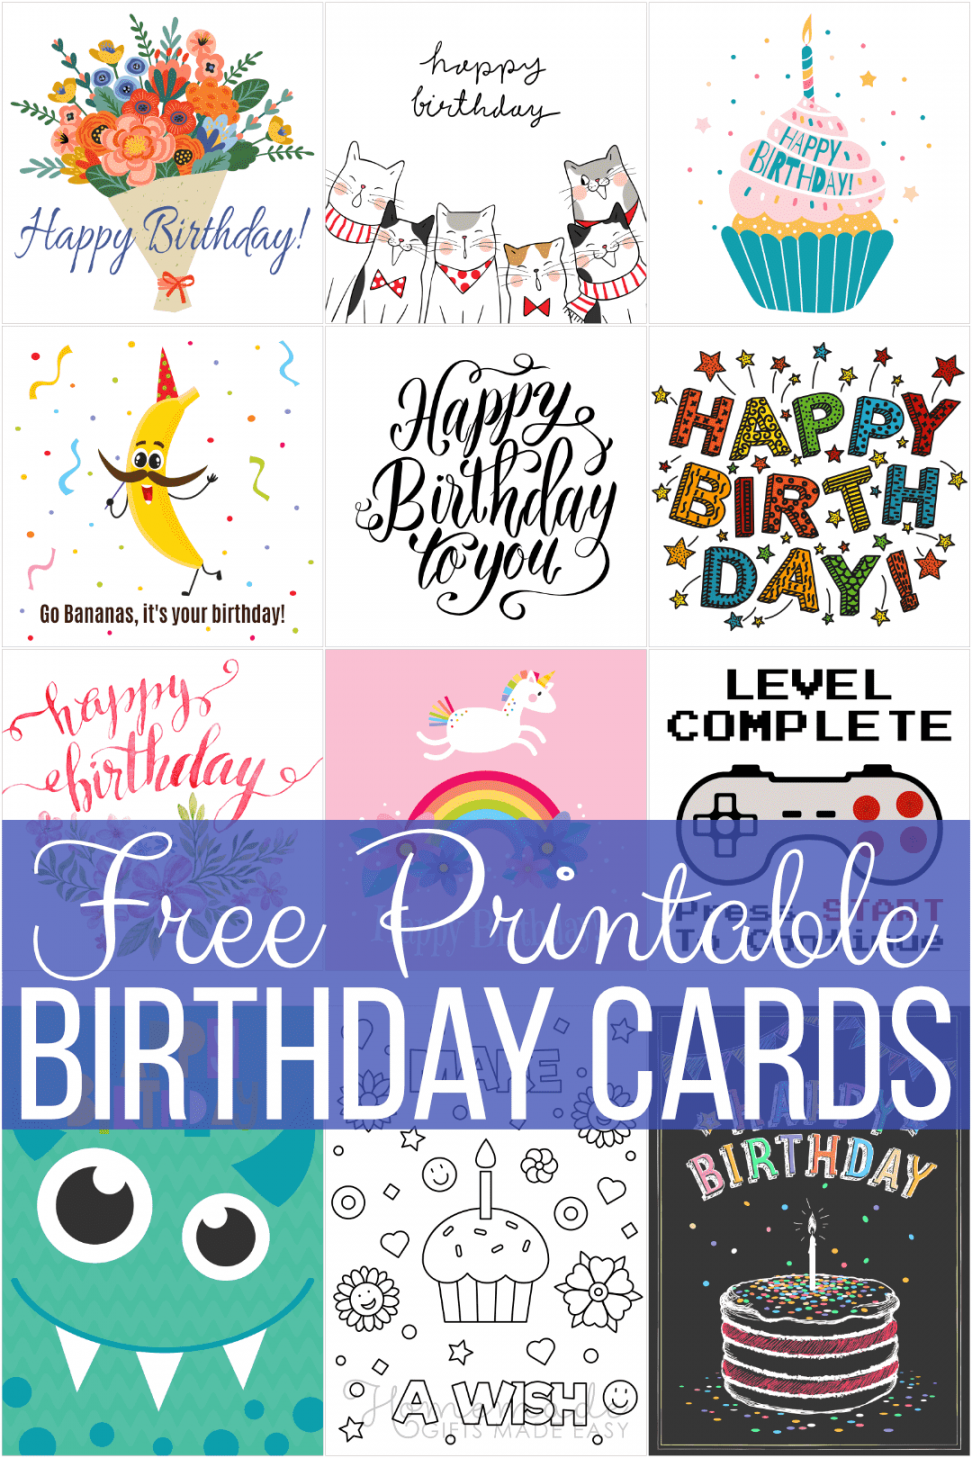 Birthday Cards Free Printable - Printable - Free Printable Birthday Cards for Everyone